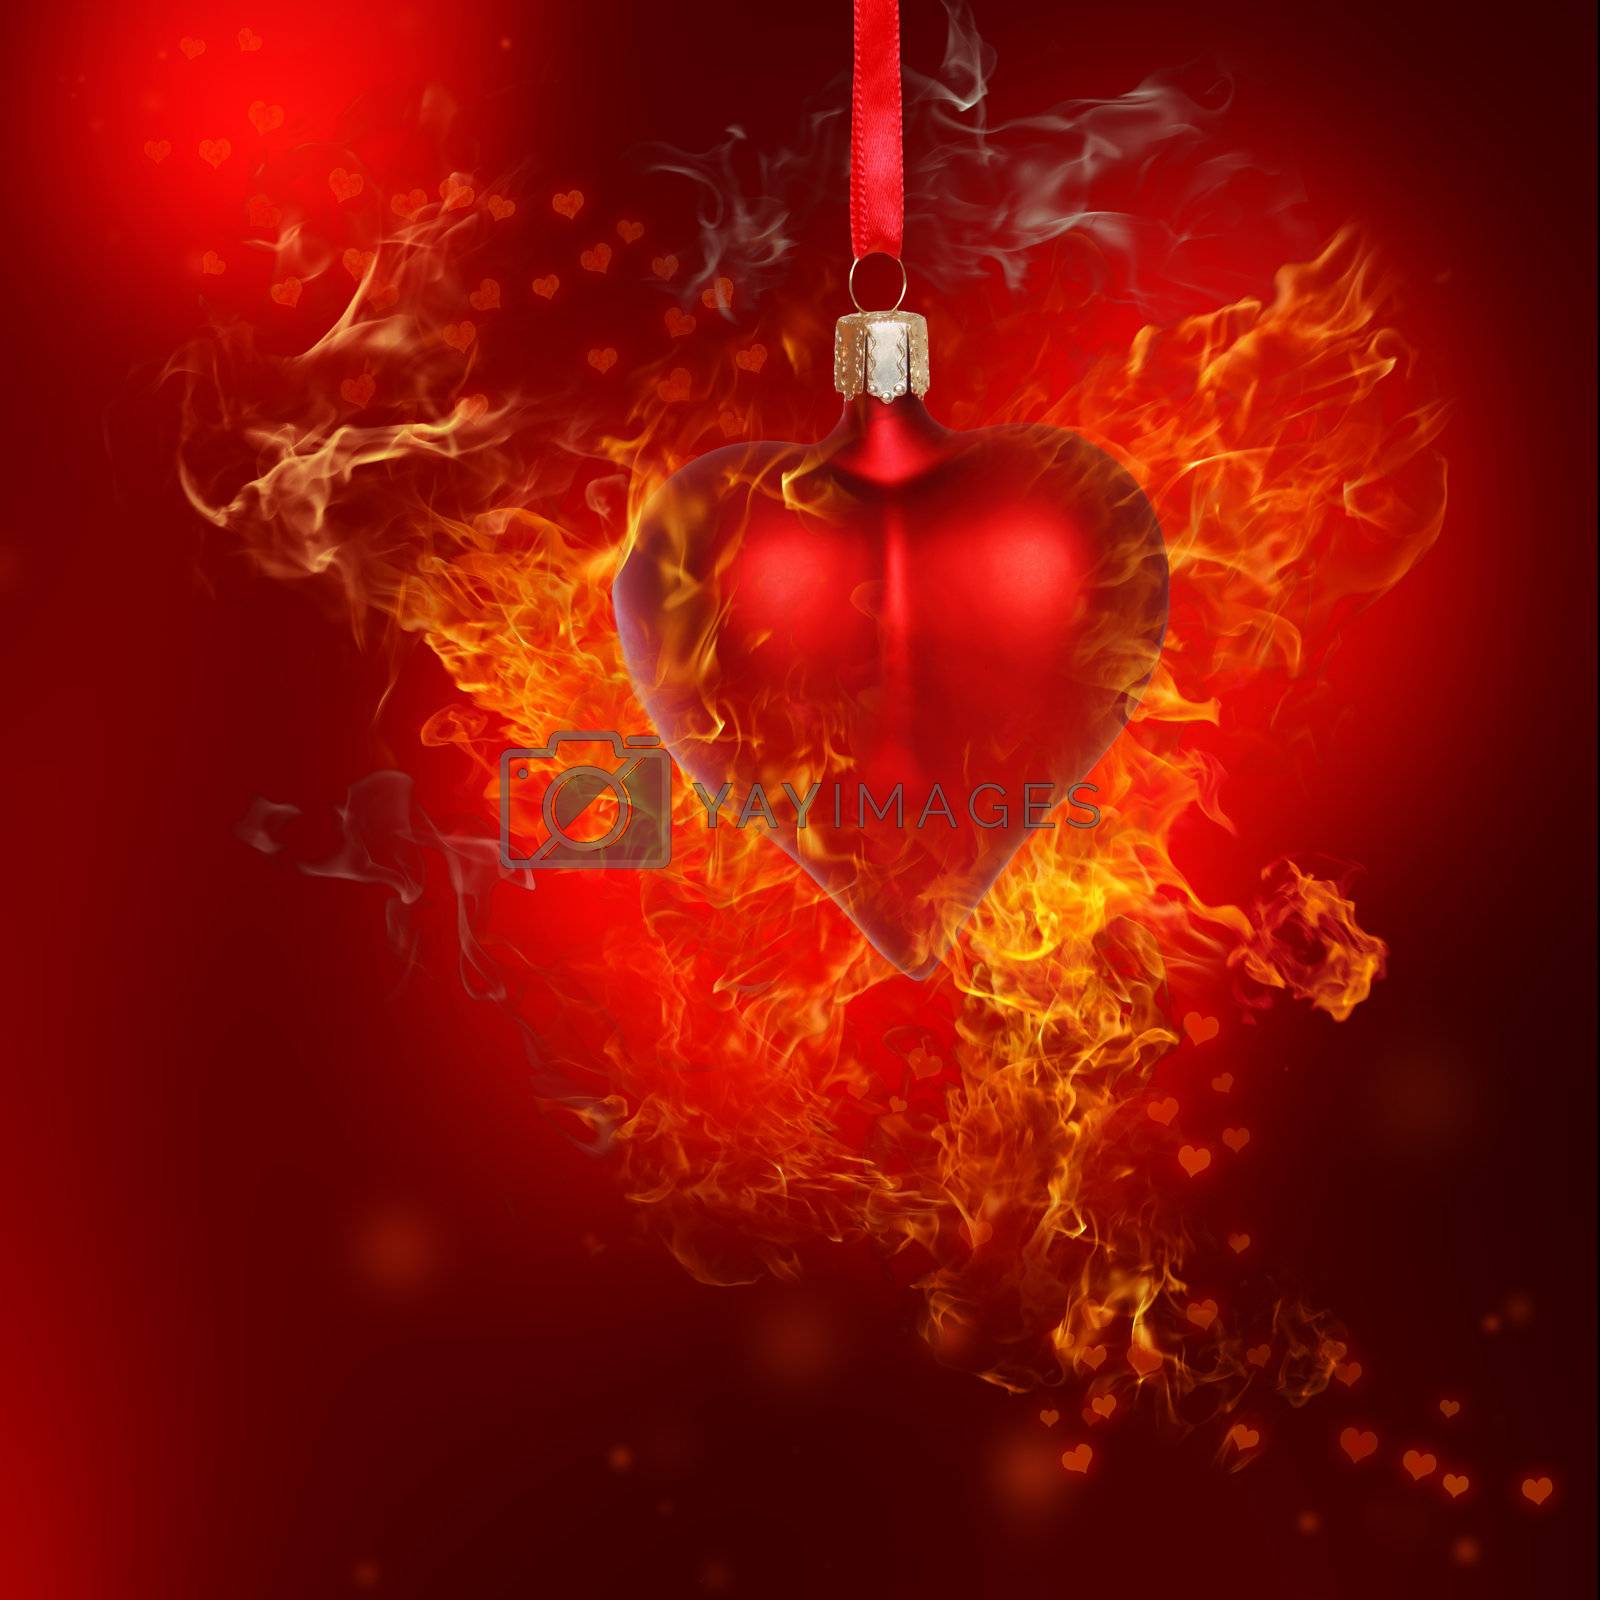 Royalty free image of Fire Heart Bauble by melpomene